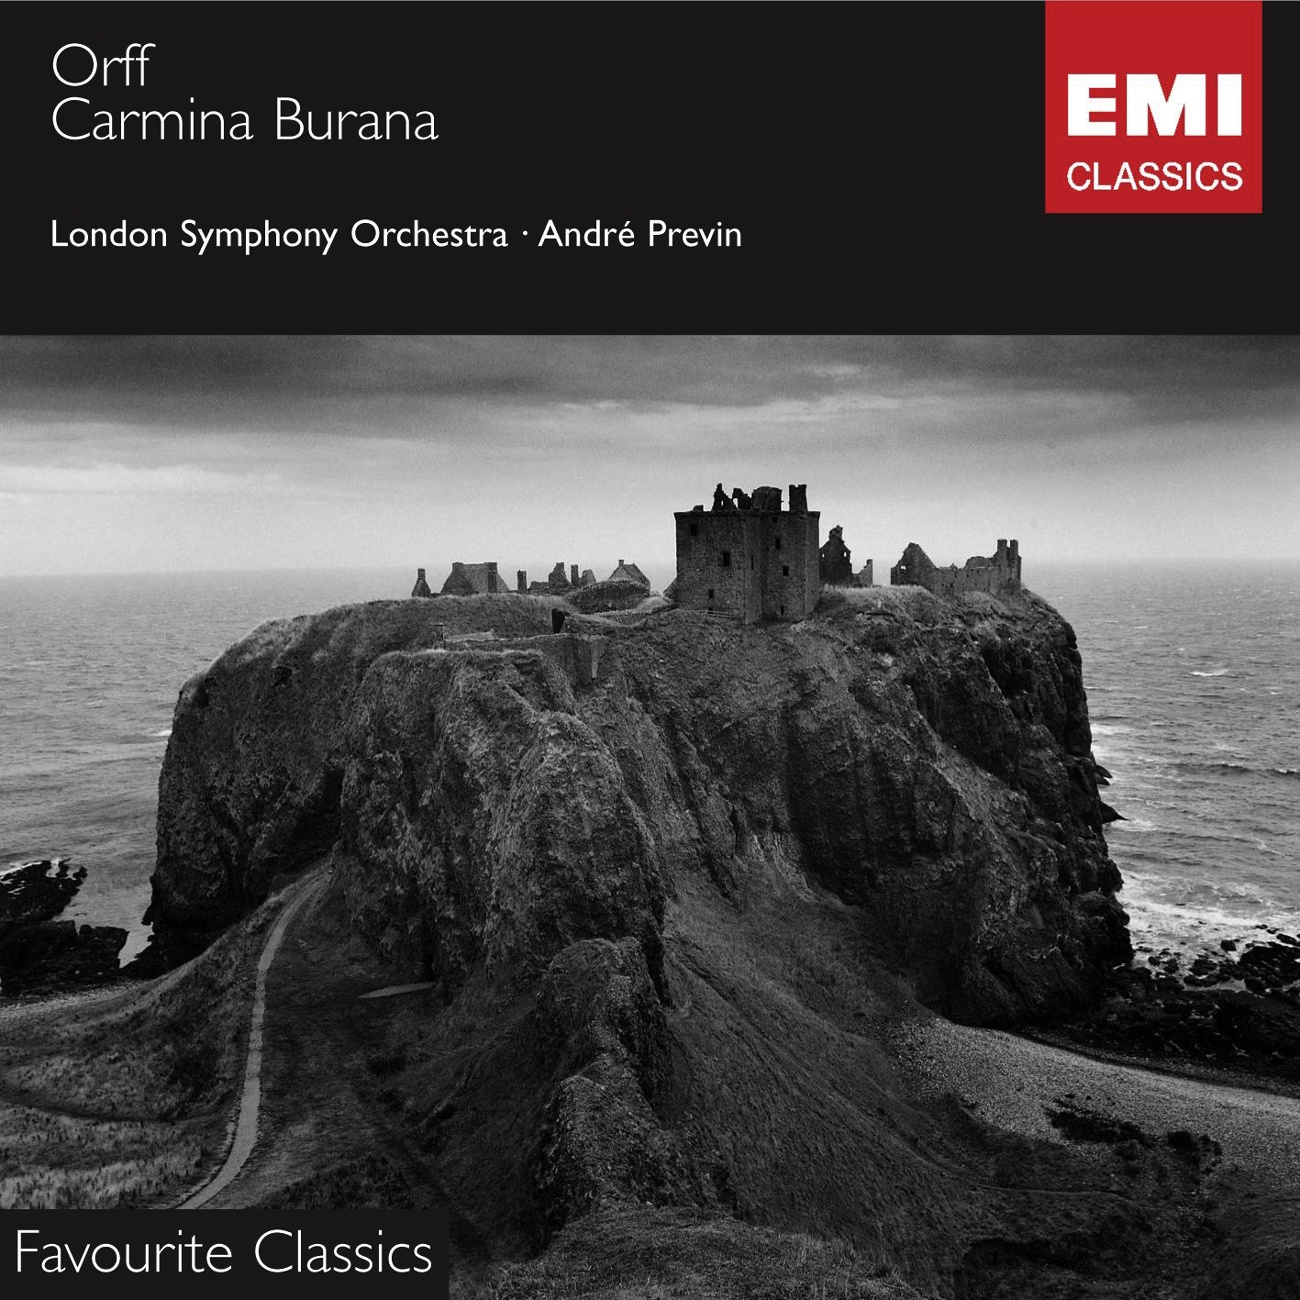 Carmina Burana - Cantiones profanae (1997 Digital Remaster), III - Cours d'amour: No. 18 - Circa mea pectora